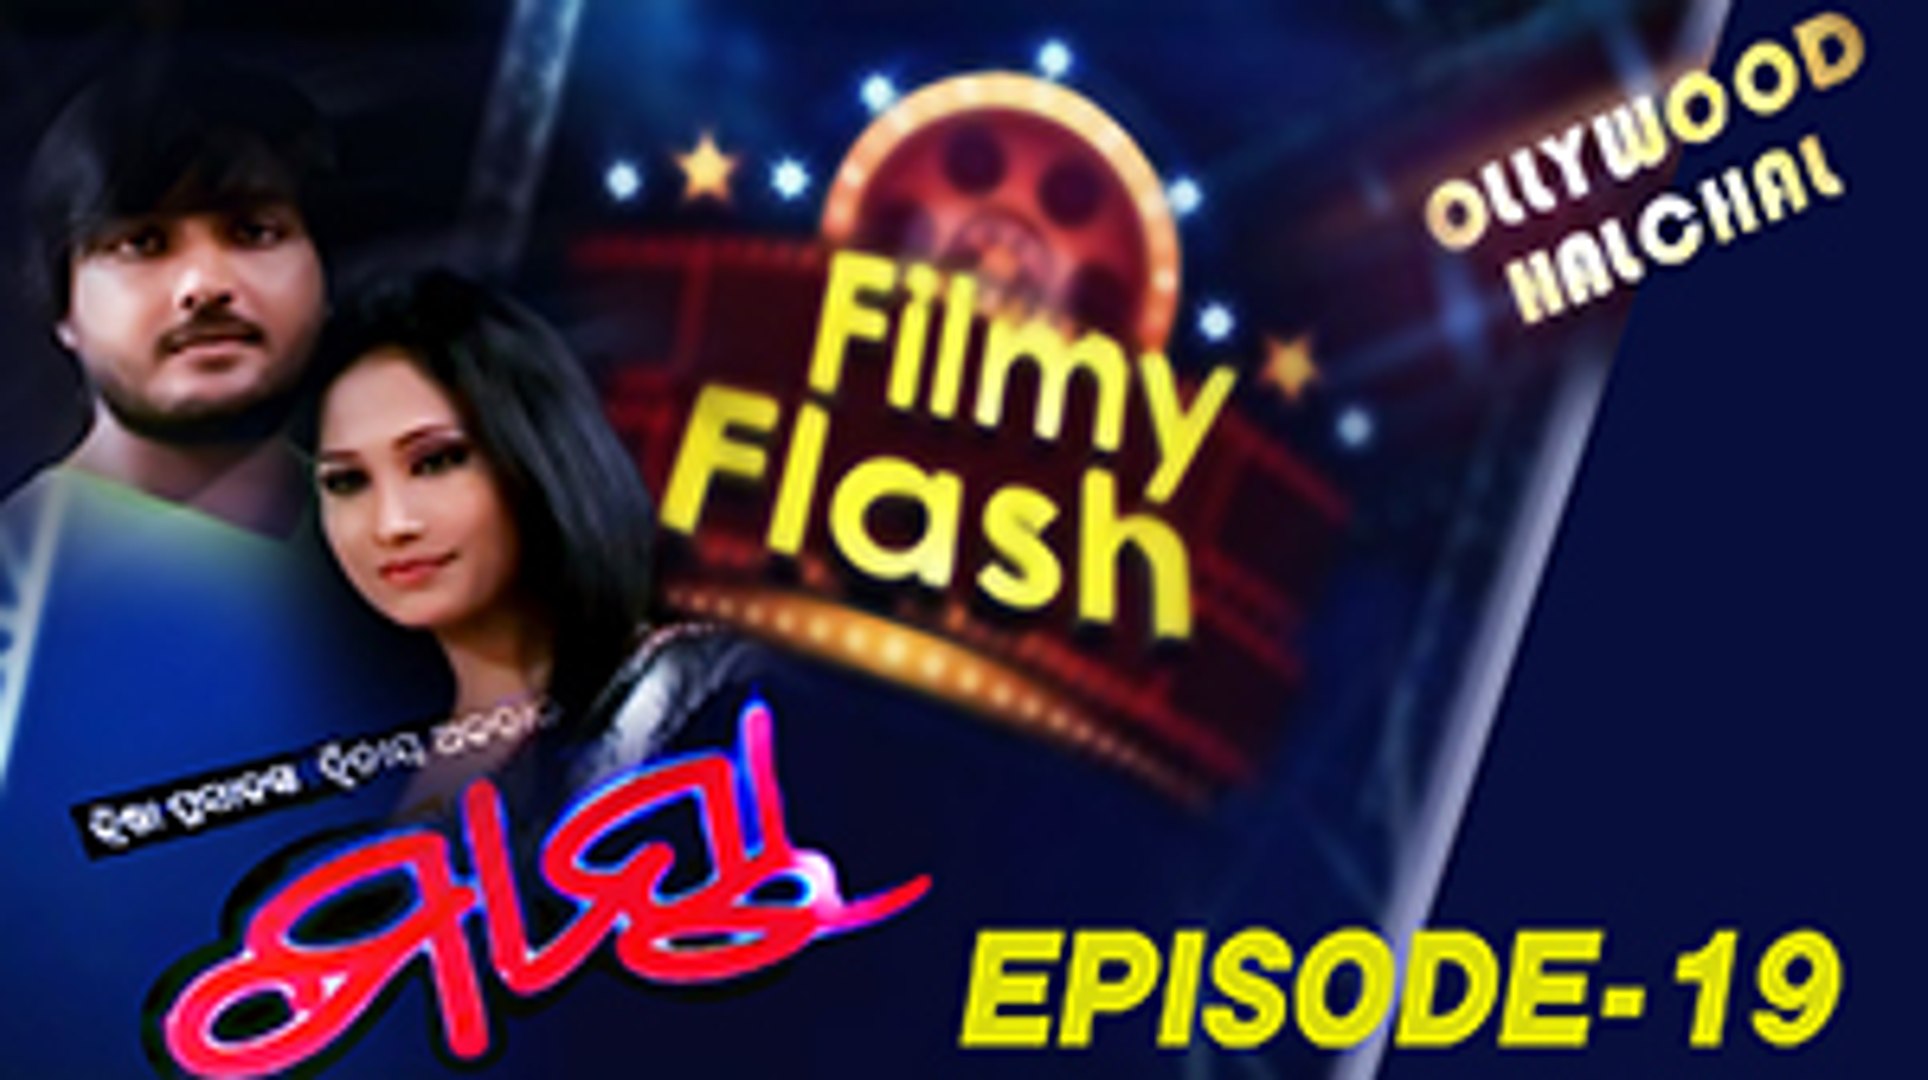 Maya Latest Odia Movie | Filmy Flash Episode - 19 | Latest Oriya Movie News | OdiaOne